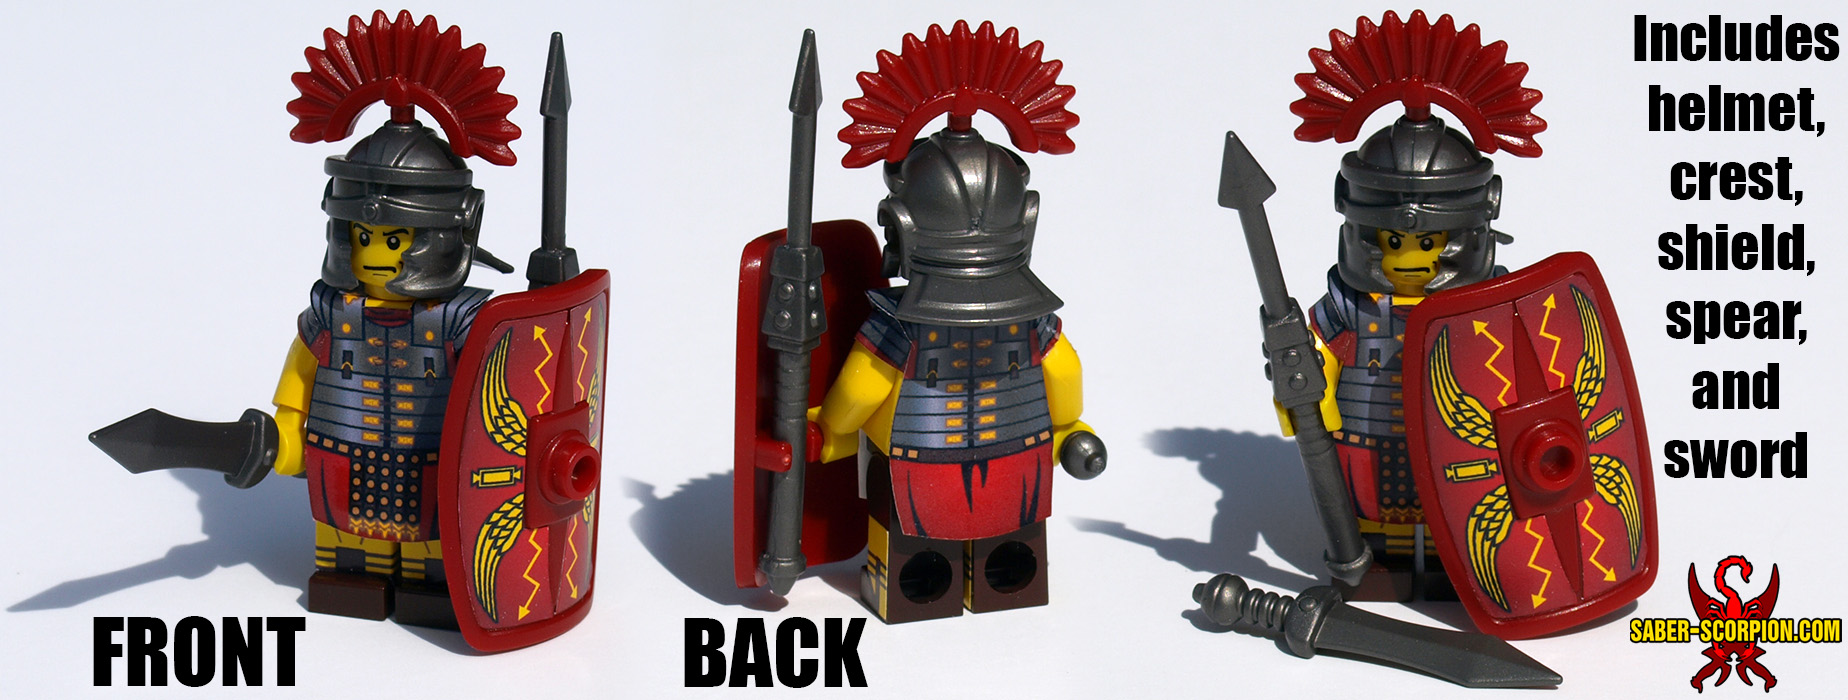 21x Roman Soldiers Mini Figures LEGO Compatible 